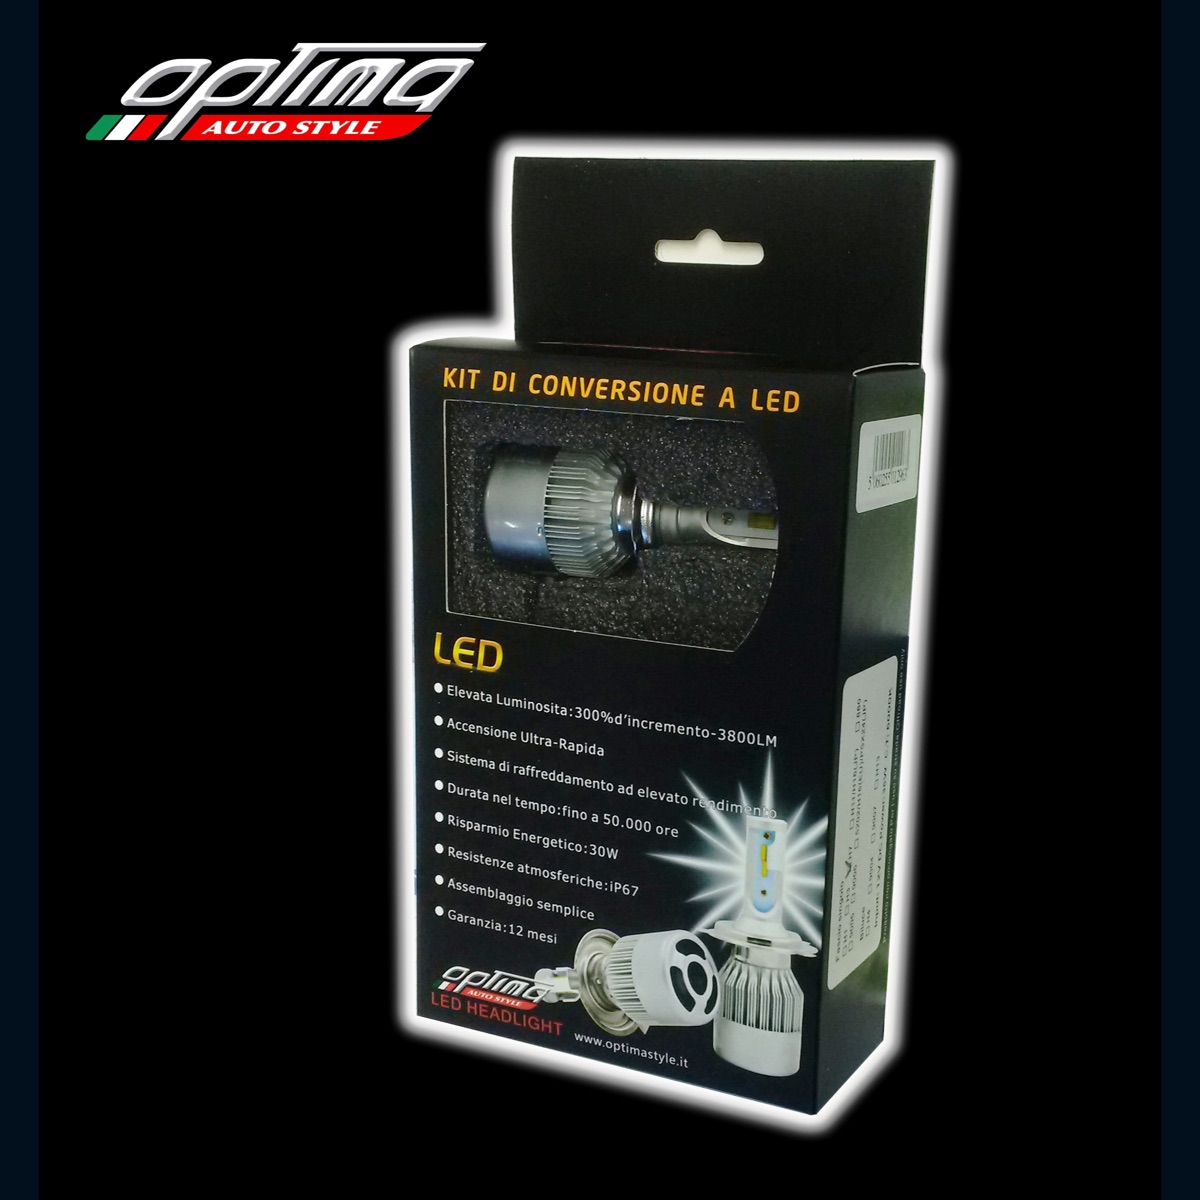 KIT CONVERSIONE A LED CANBUS, LAMPADE BI-LED ATTACCO H7, 36W 12V – 8000LM  (kit) – VENTILATO – Optimastyle